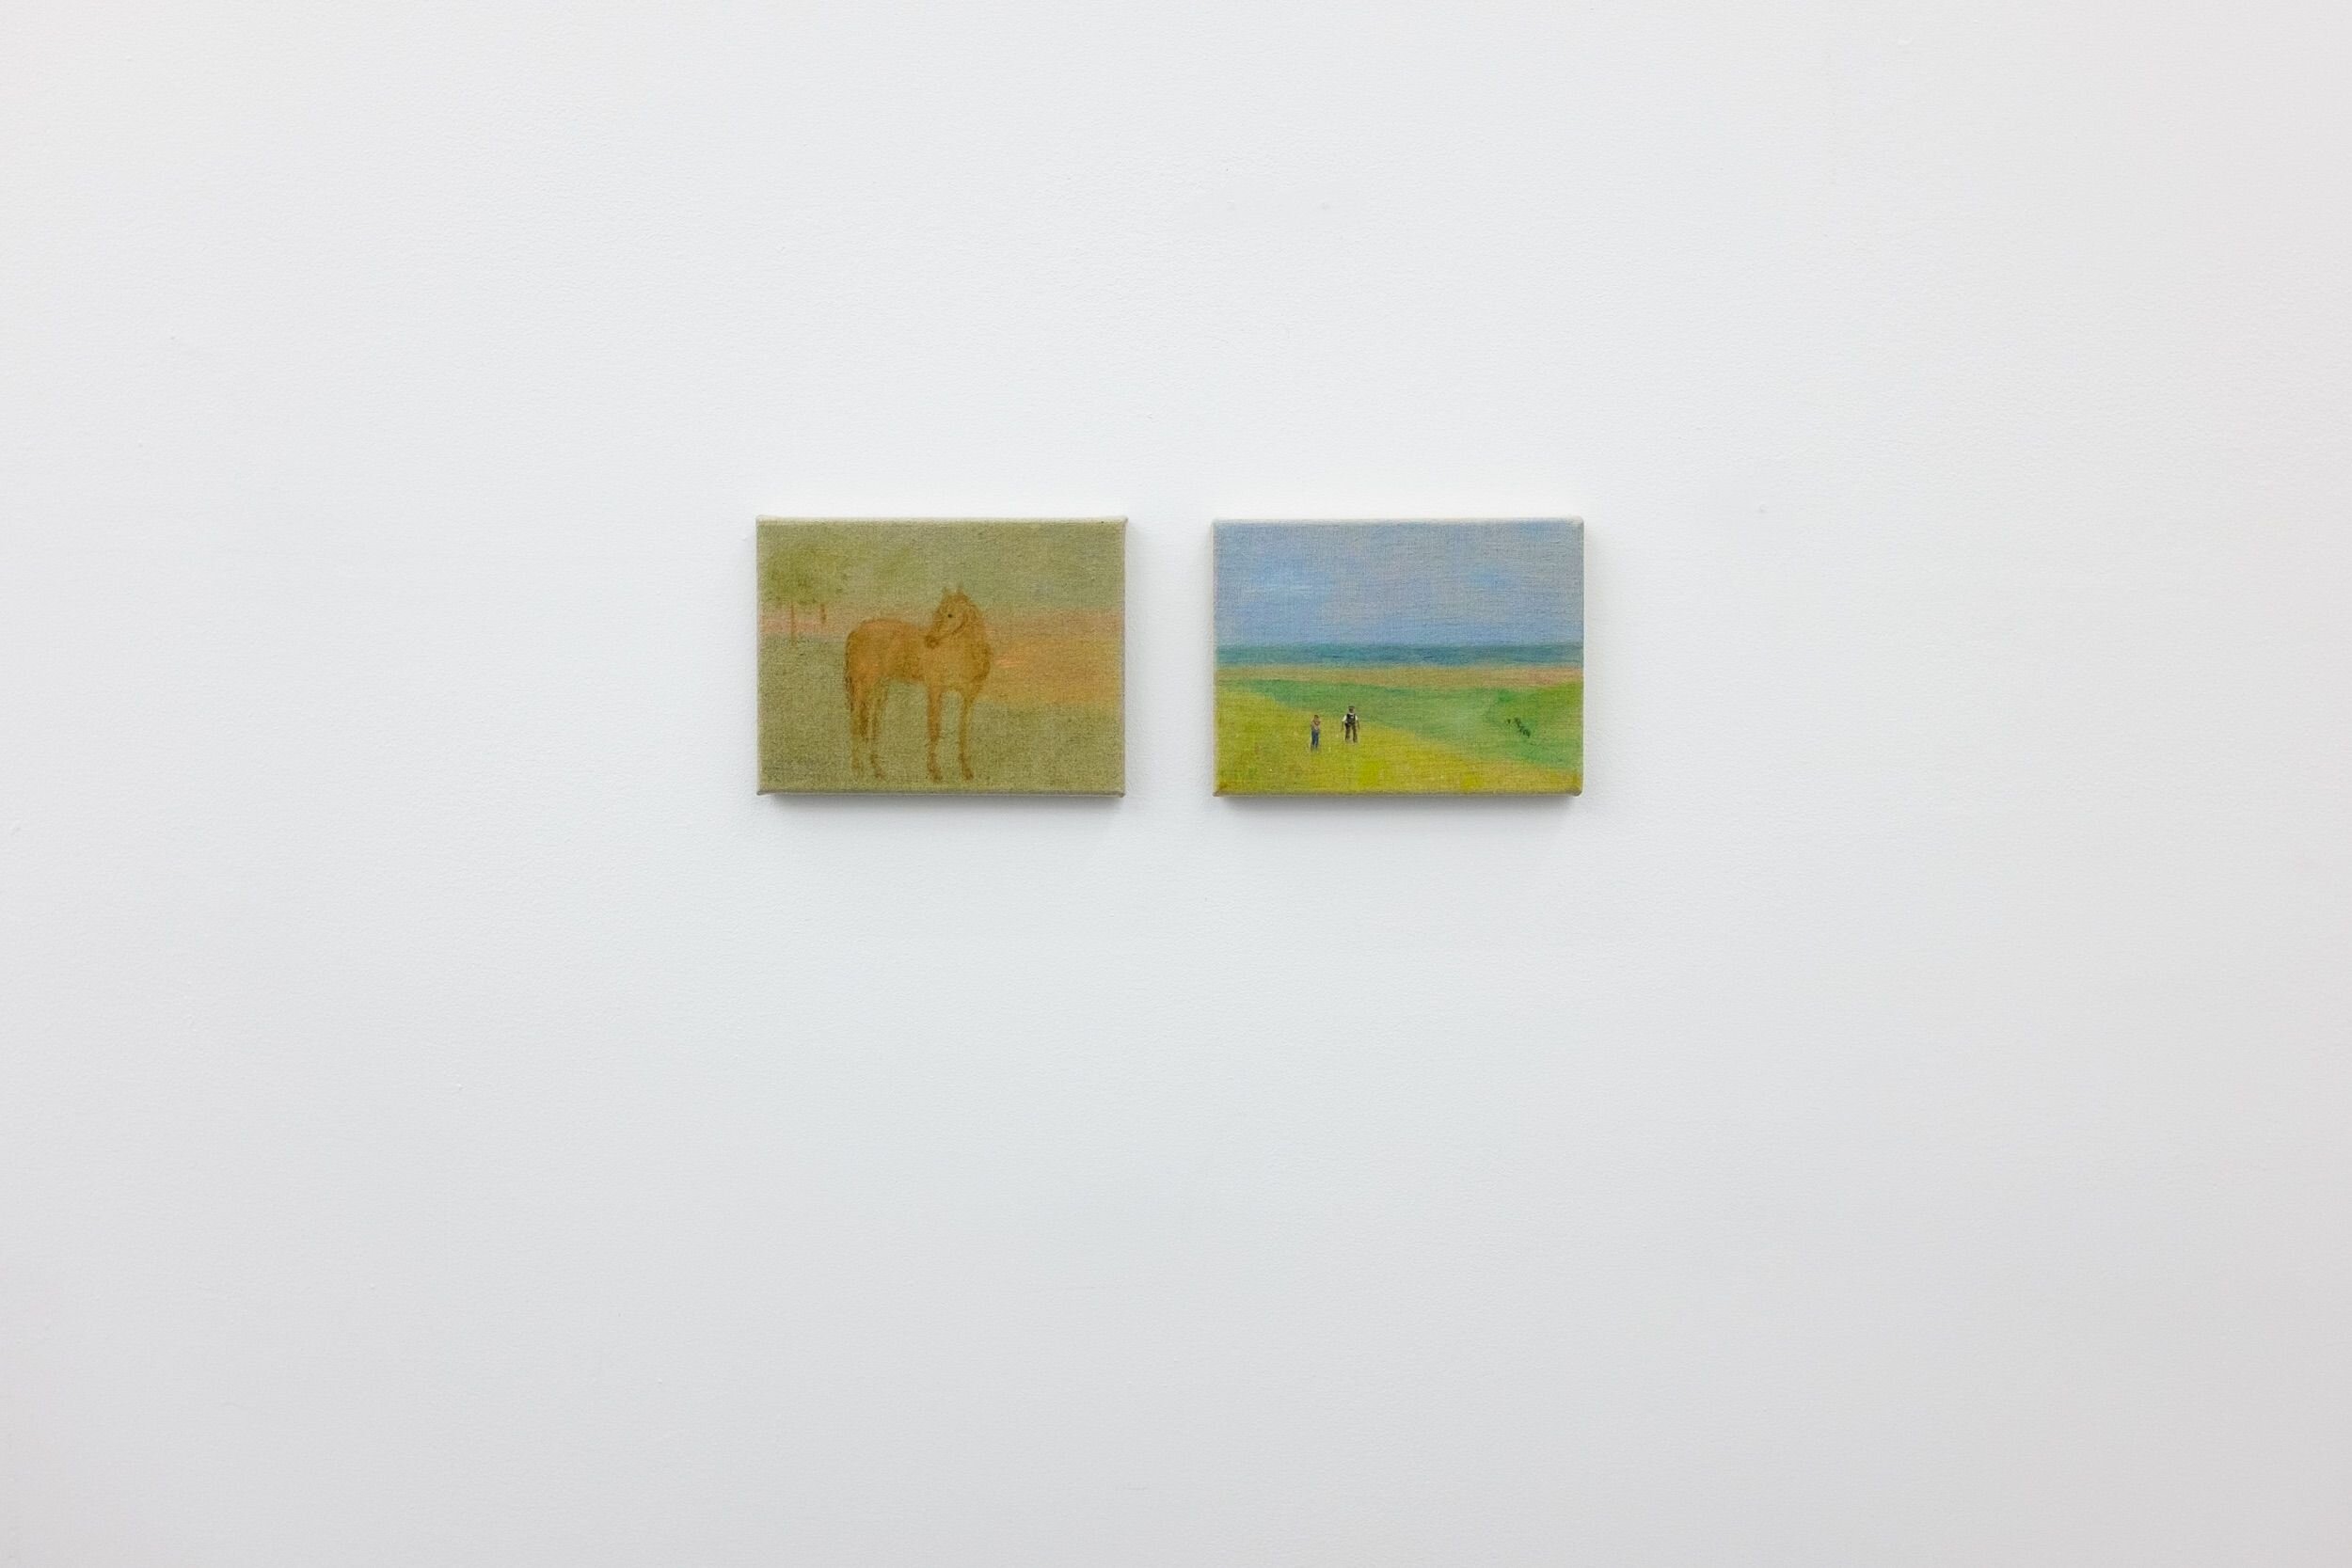 Katelyn Eichwald, 'Quarter Horse' (l) &amp; 'Spring' (r), both 2020, oil on linen, 6 x 8 in.